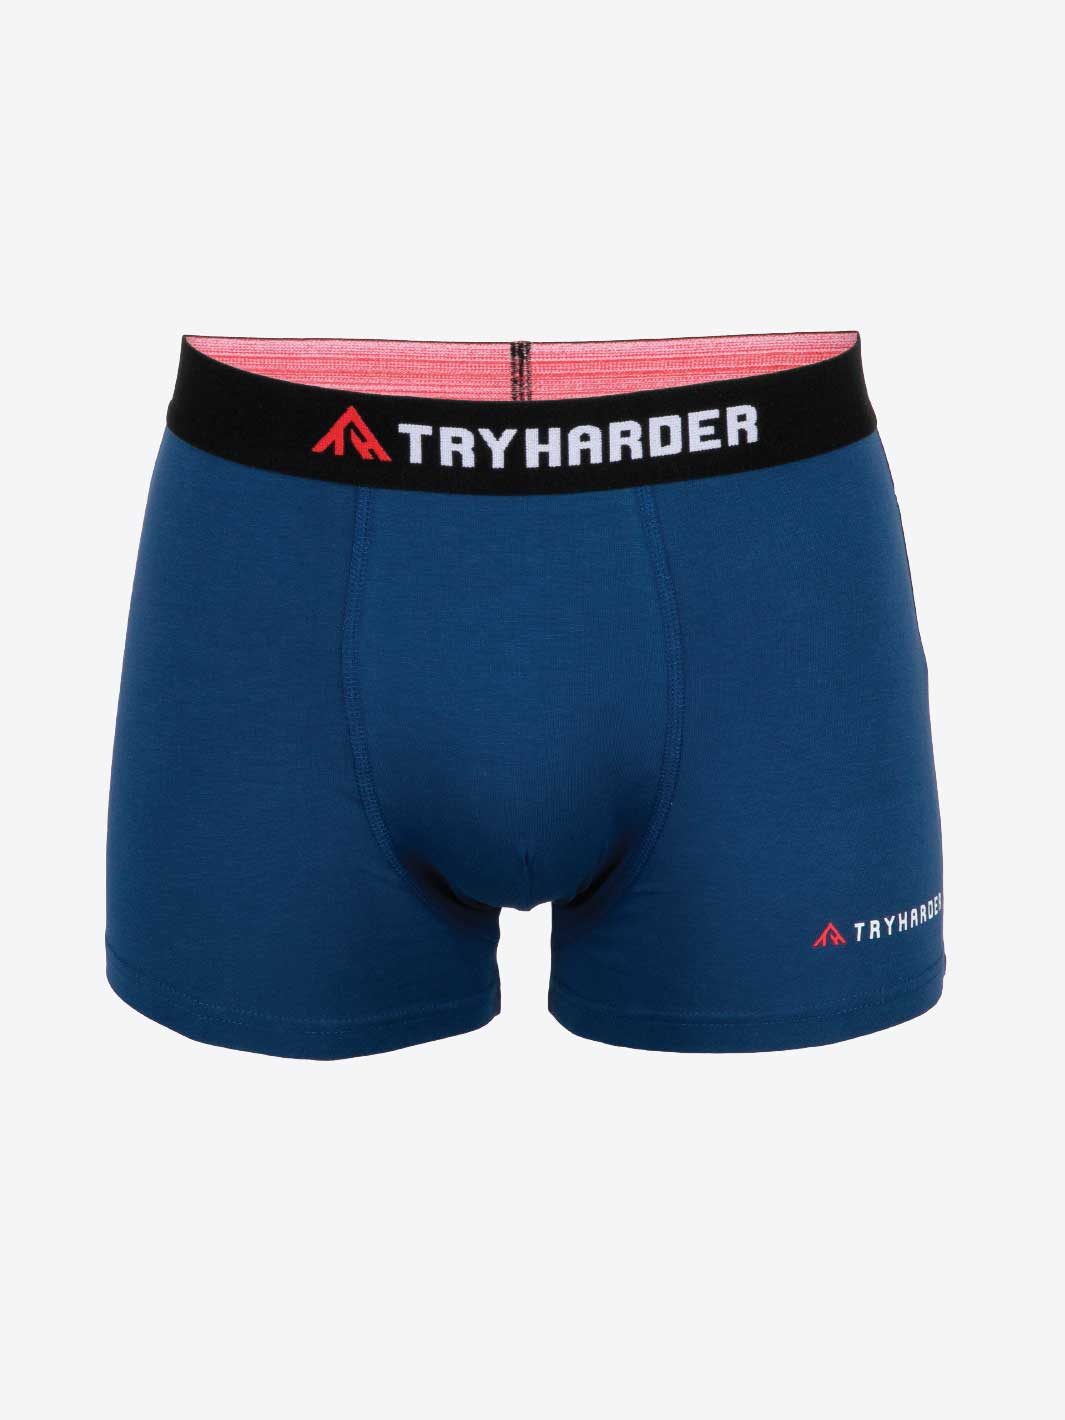 TRYHARDER - Boxer - Blau 1 Pack